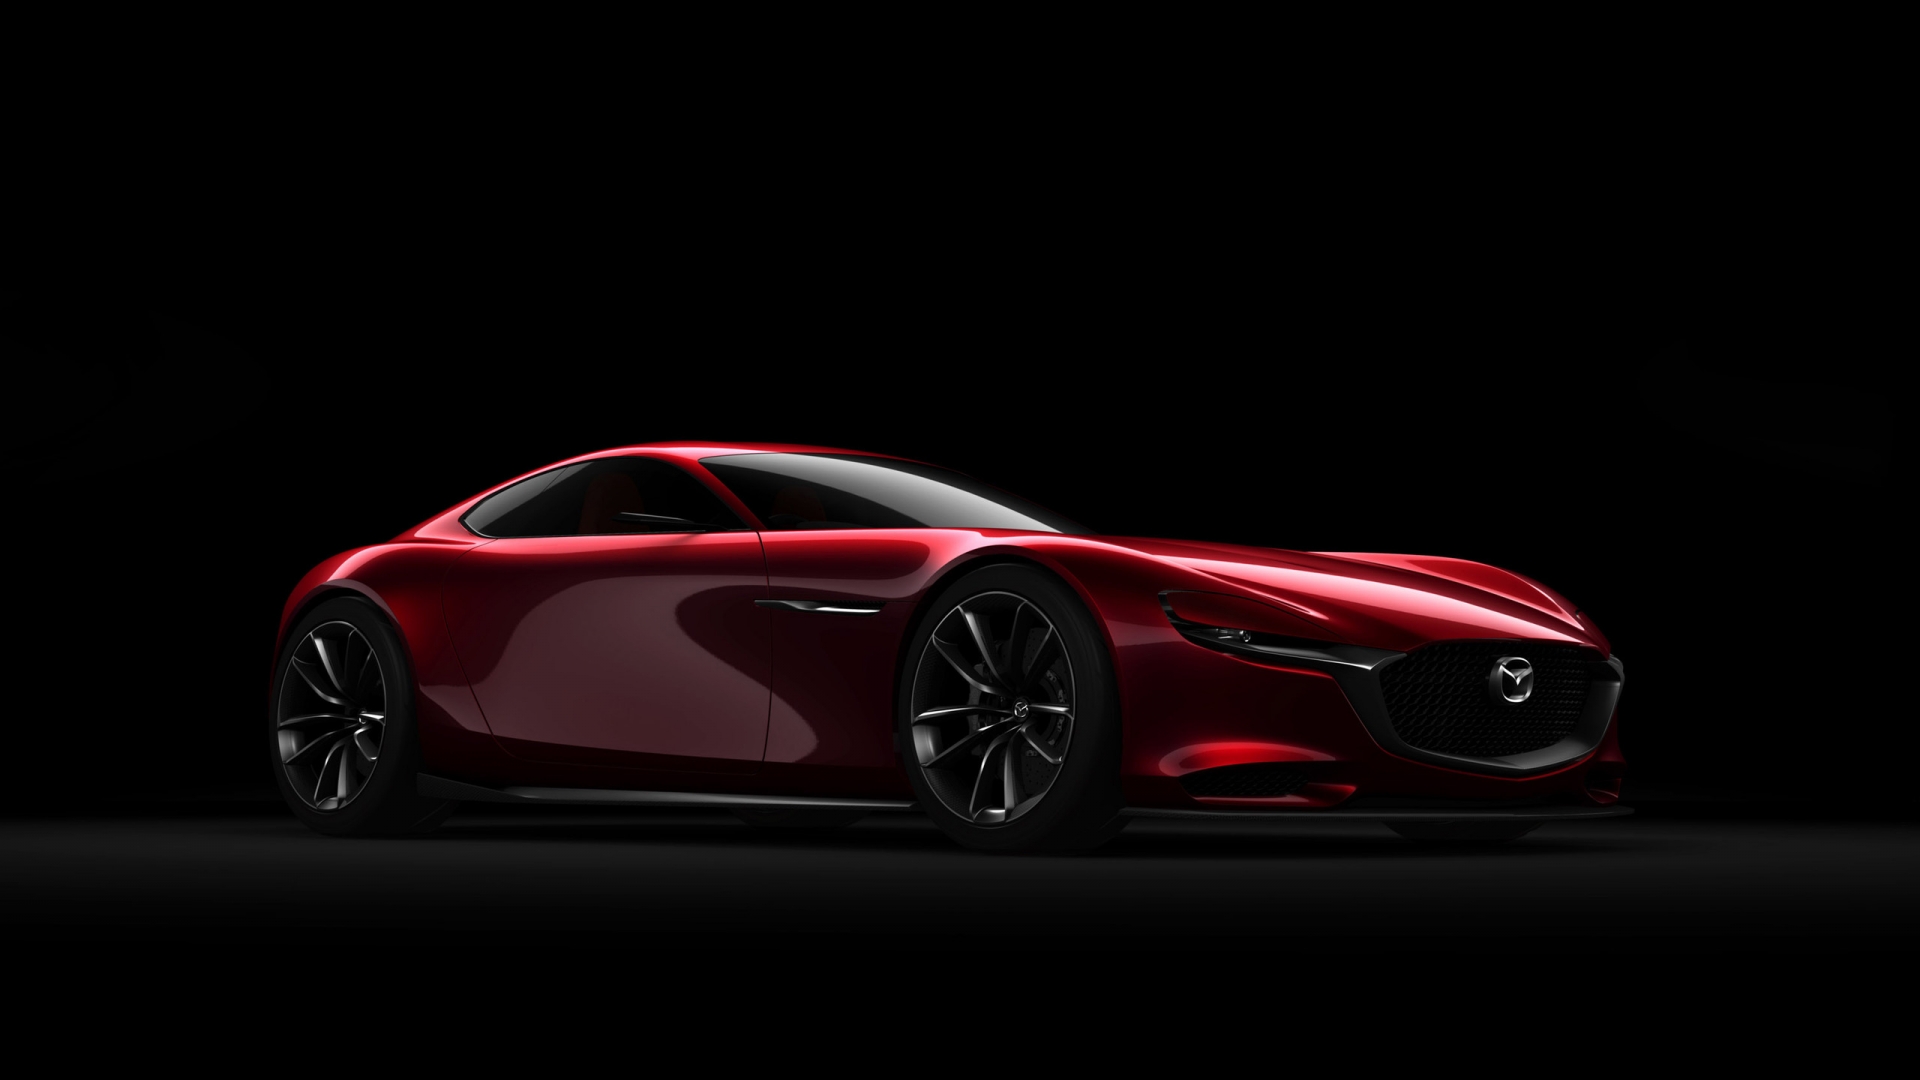 2015 Mazda RX Vision Concept for 1920 x 1080 HDTV 1080p resolution